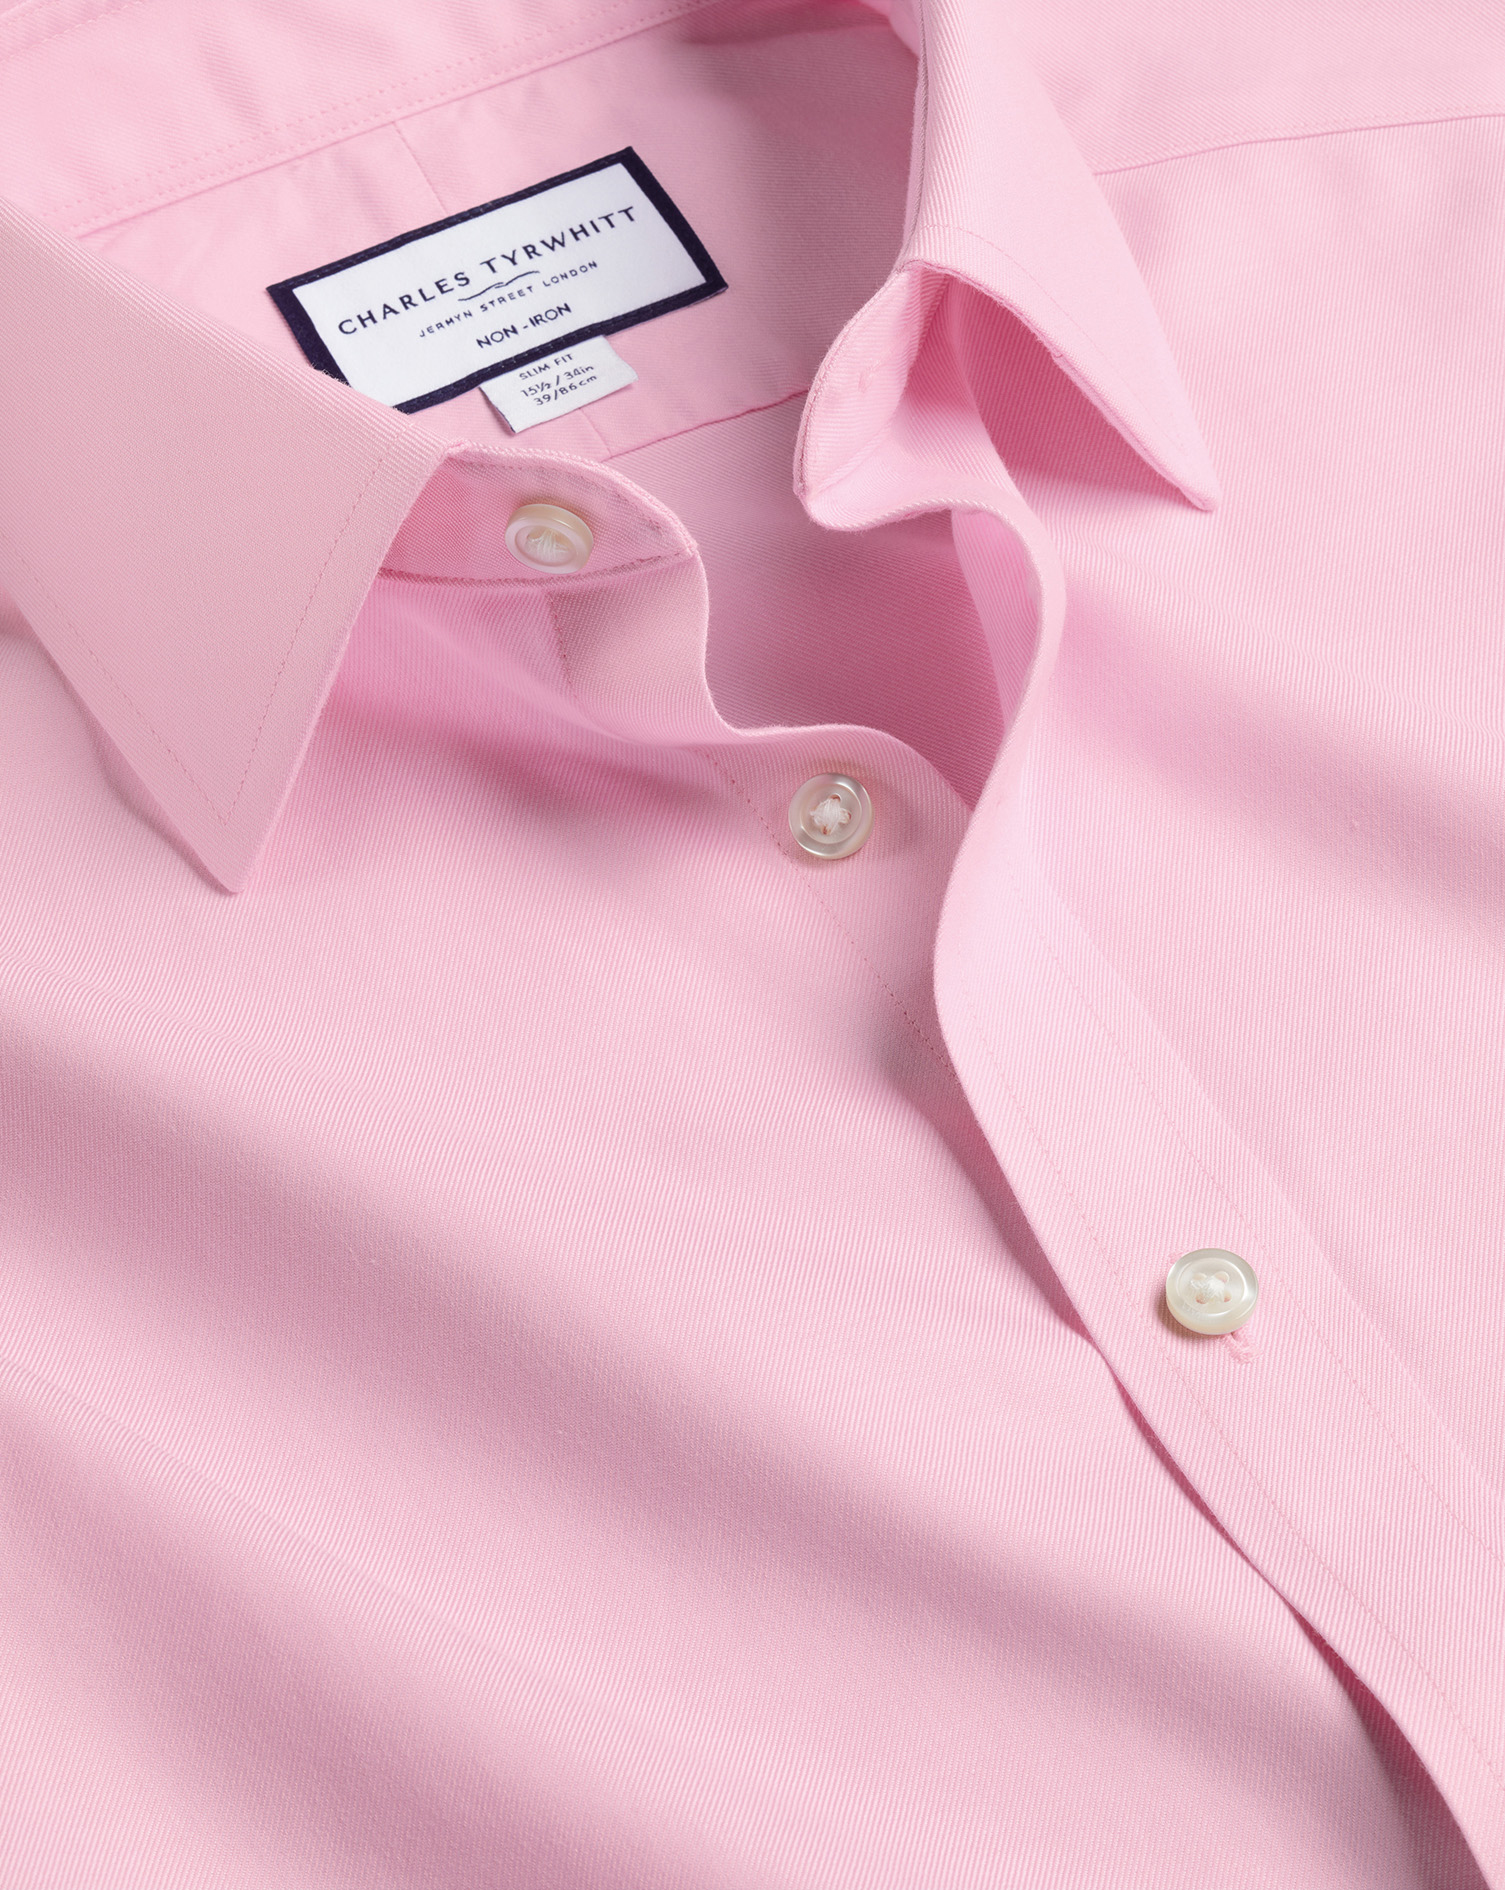 Men's Charles Tyrwhitt Non-Iron Twill Dress Shirt - Pink French Cuff Size Large Cotton
